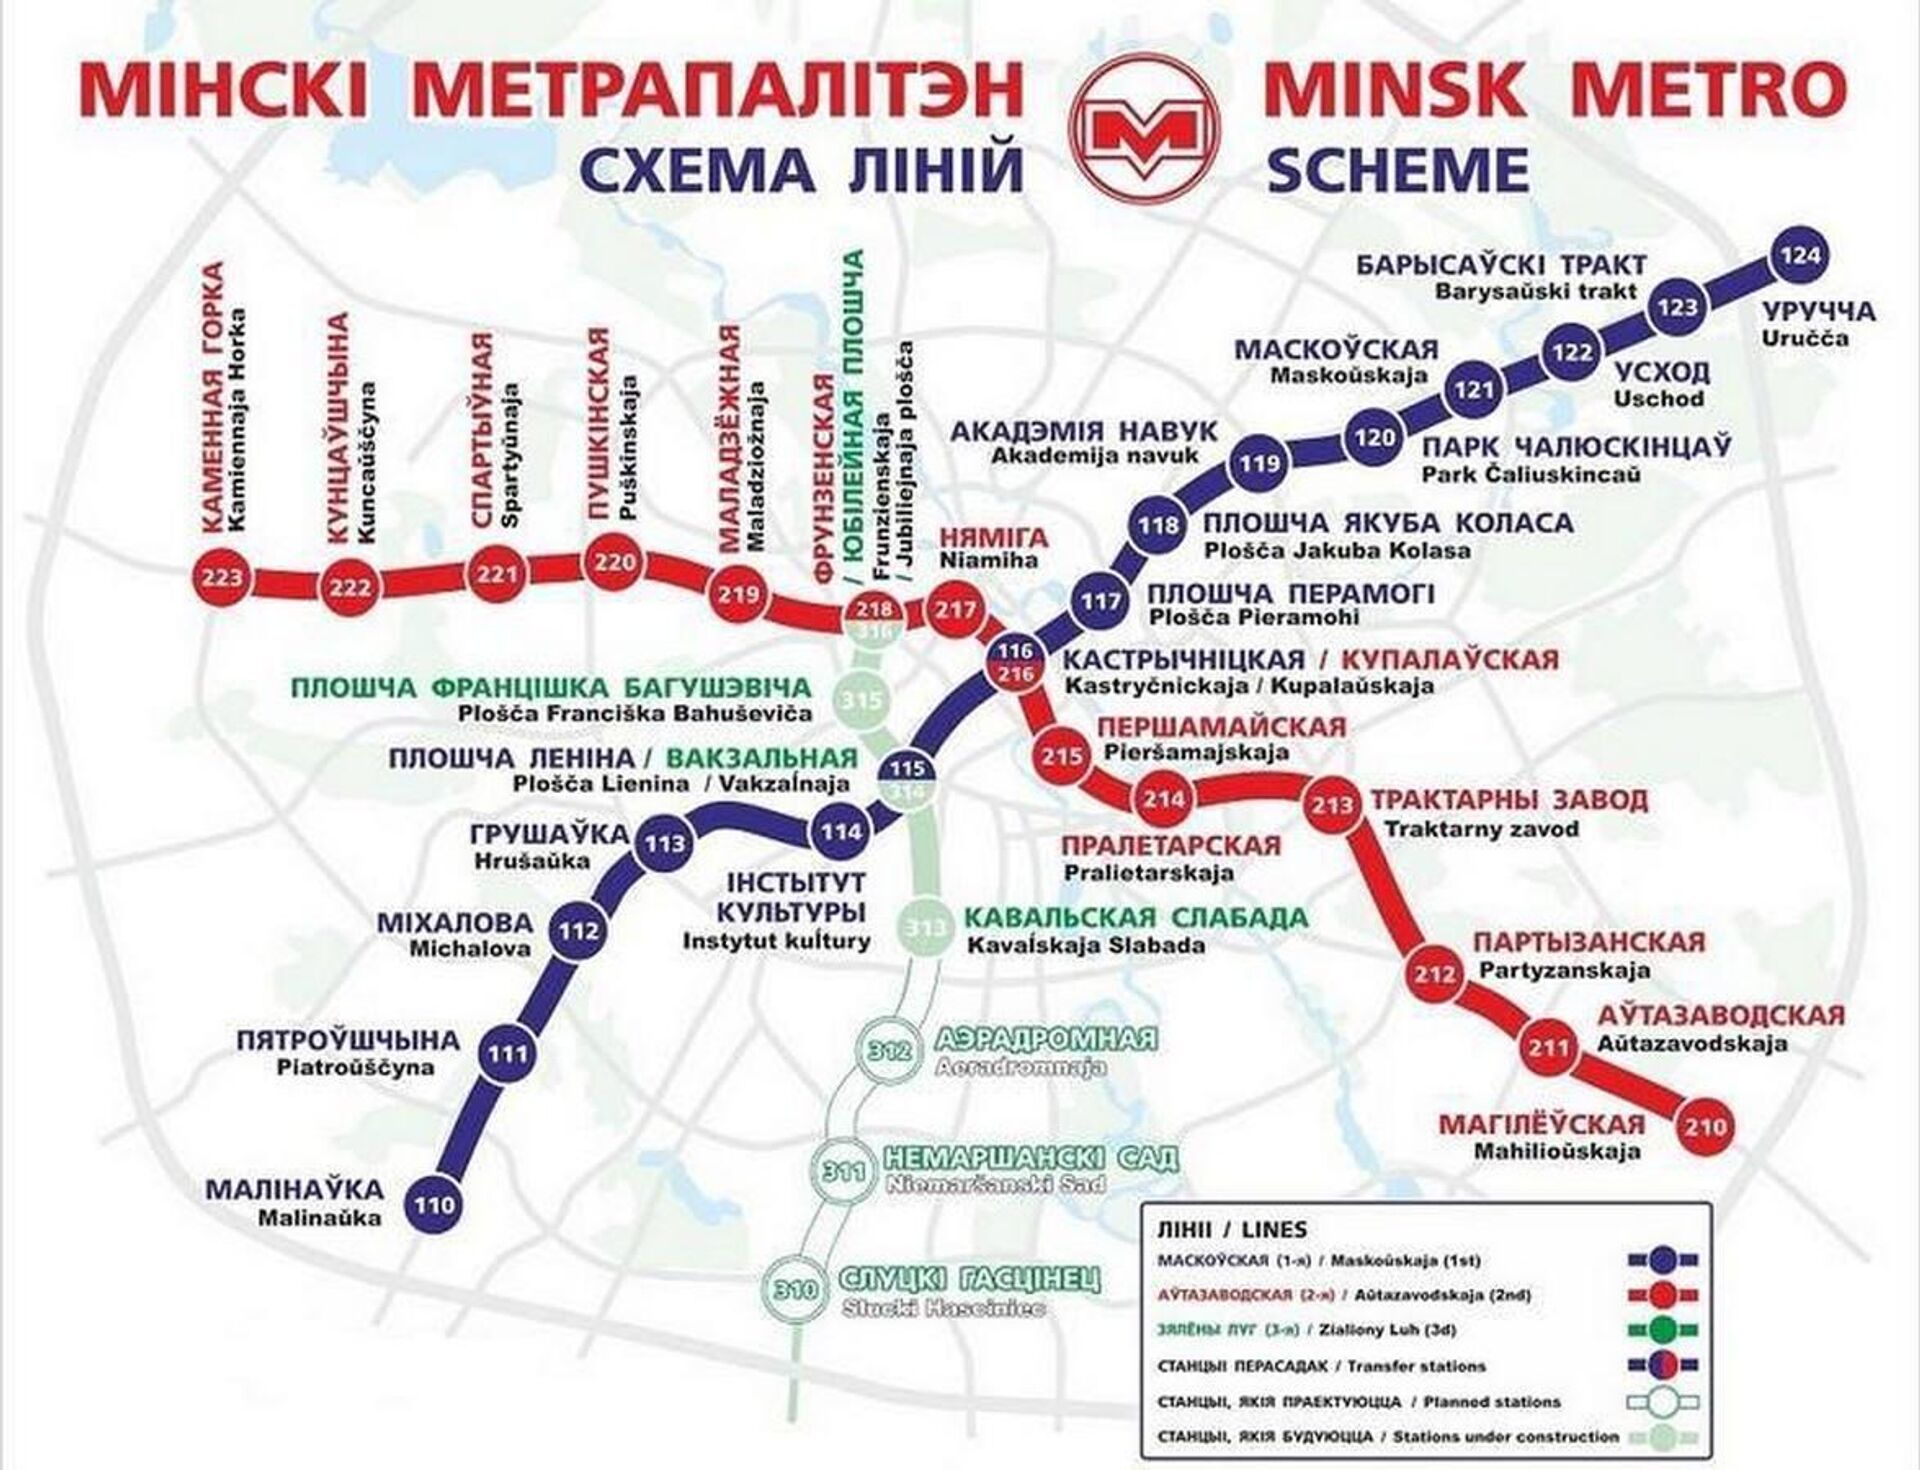 Схема минского метрополитена - Sputnik Беларусь, 1920, 05.09.2022